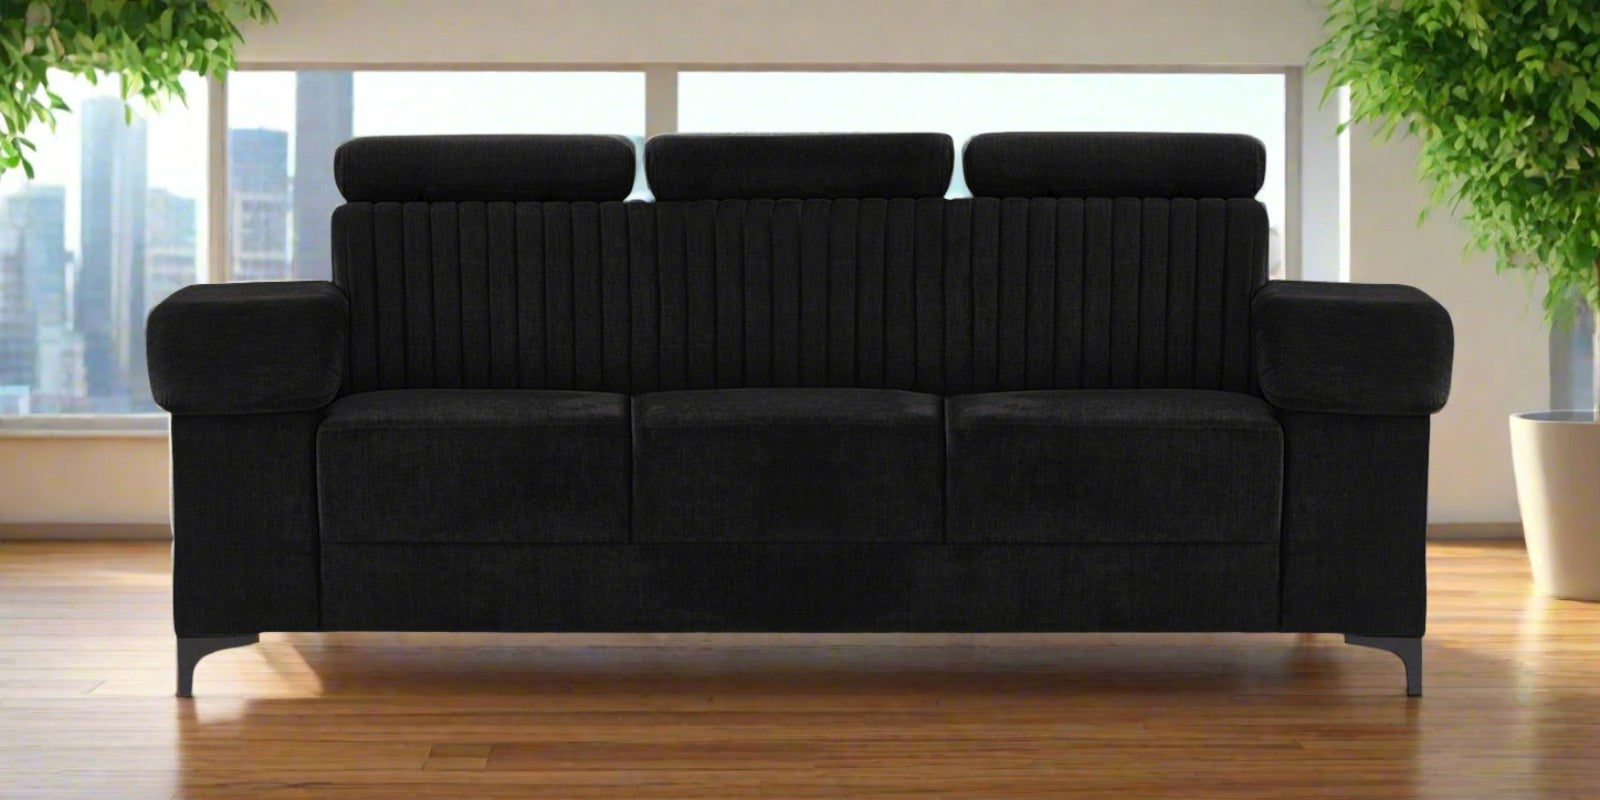 Draco Fabric 3 Seater Sofa in Heather Black Colour